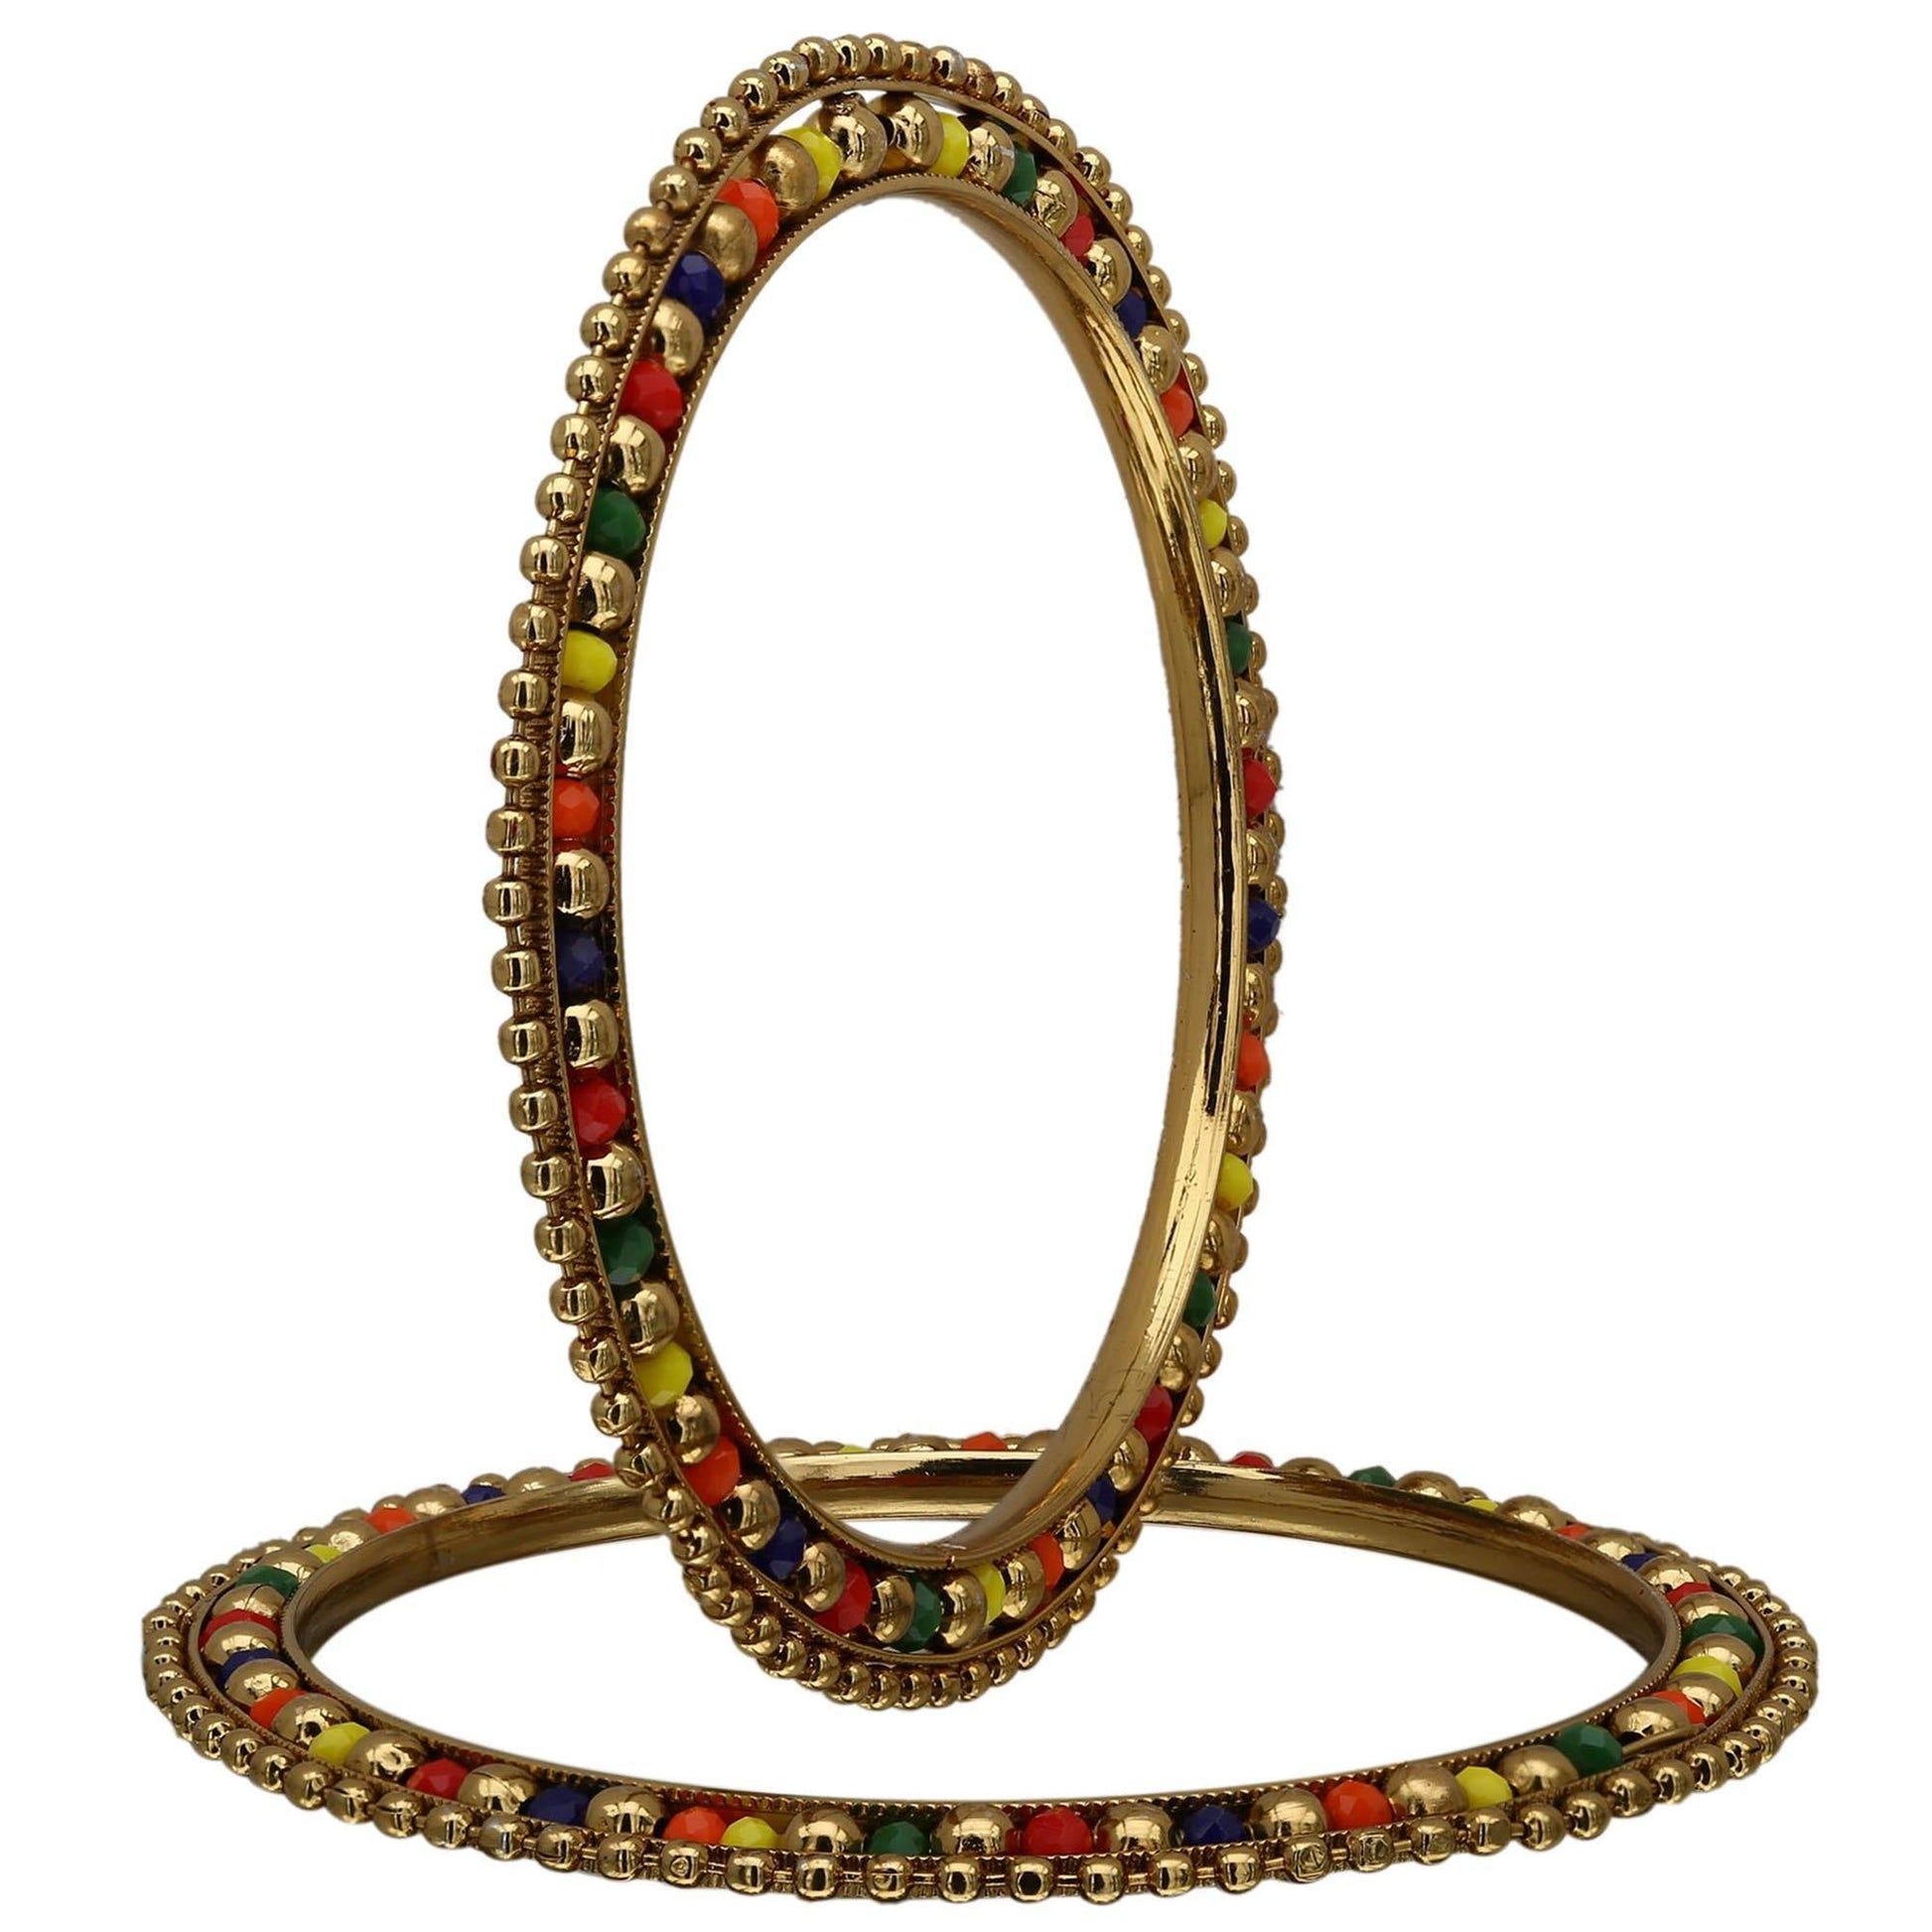 sukriti stylish multicolor beads metal bangles for girls & women – set of 4